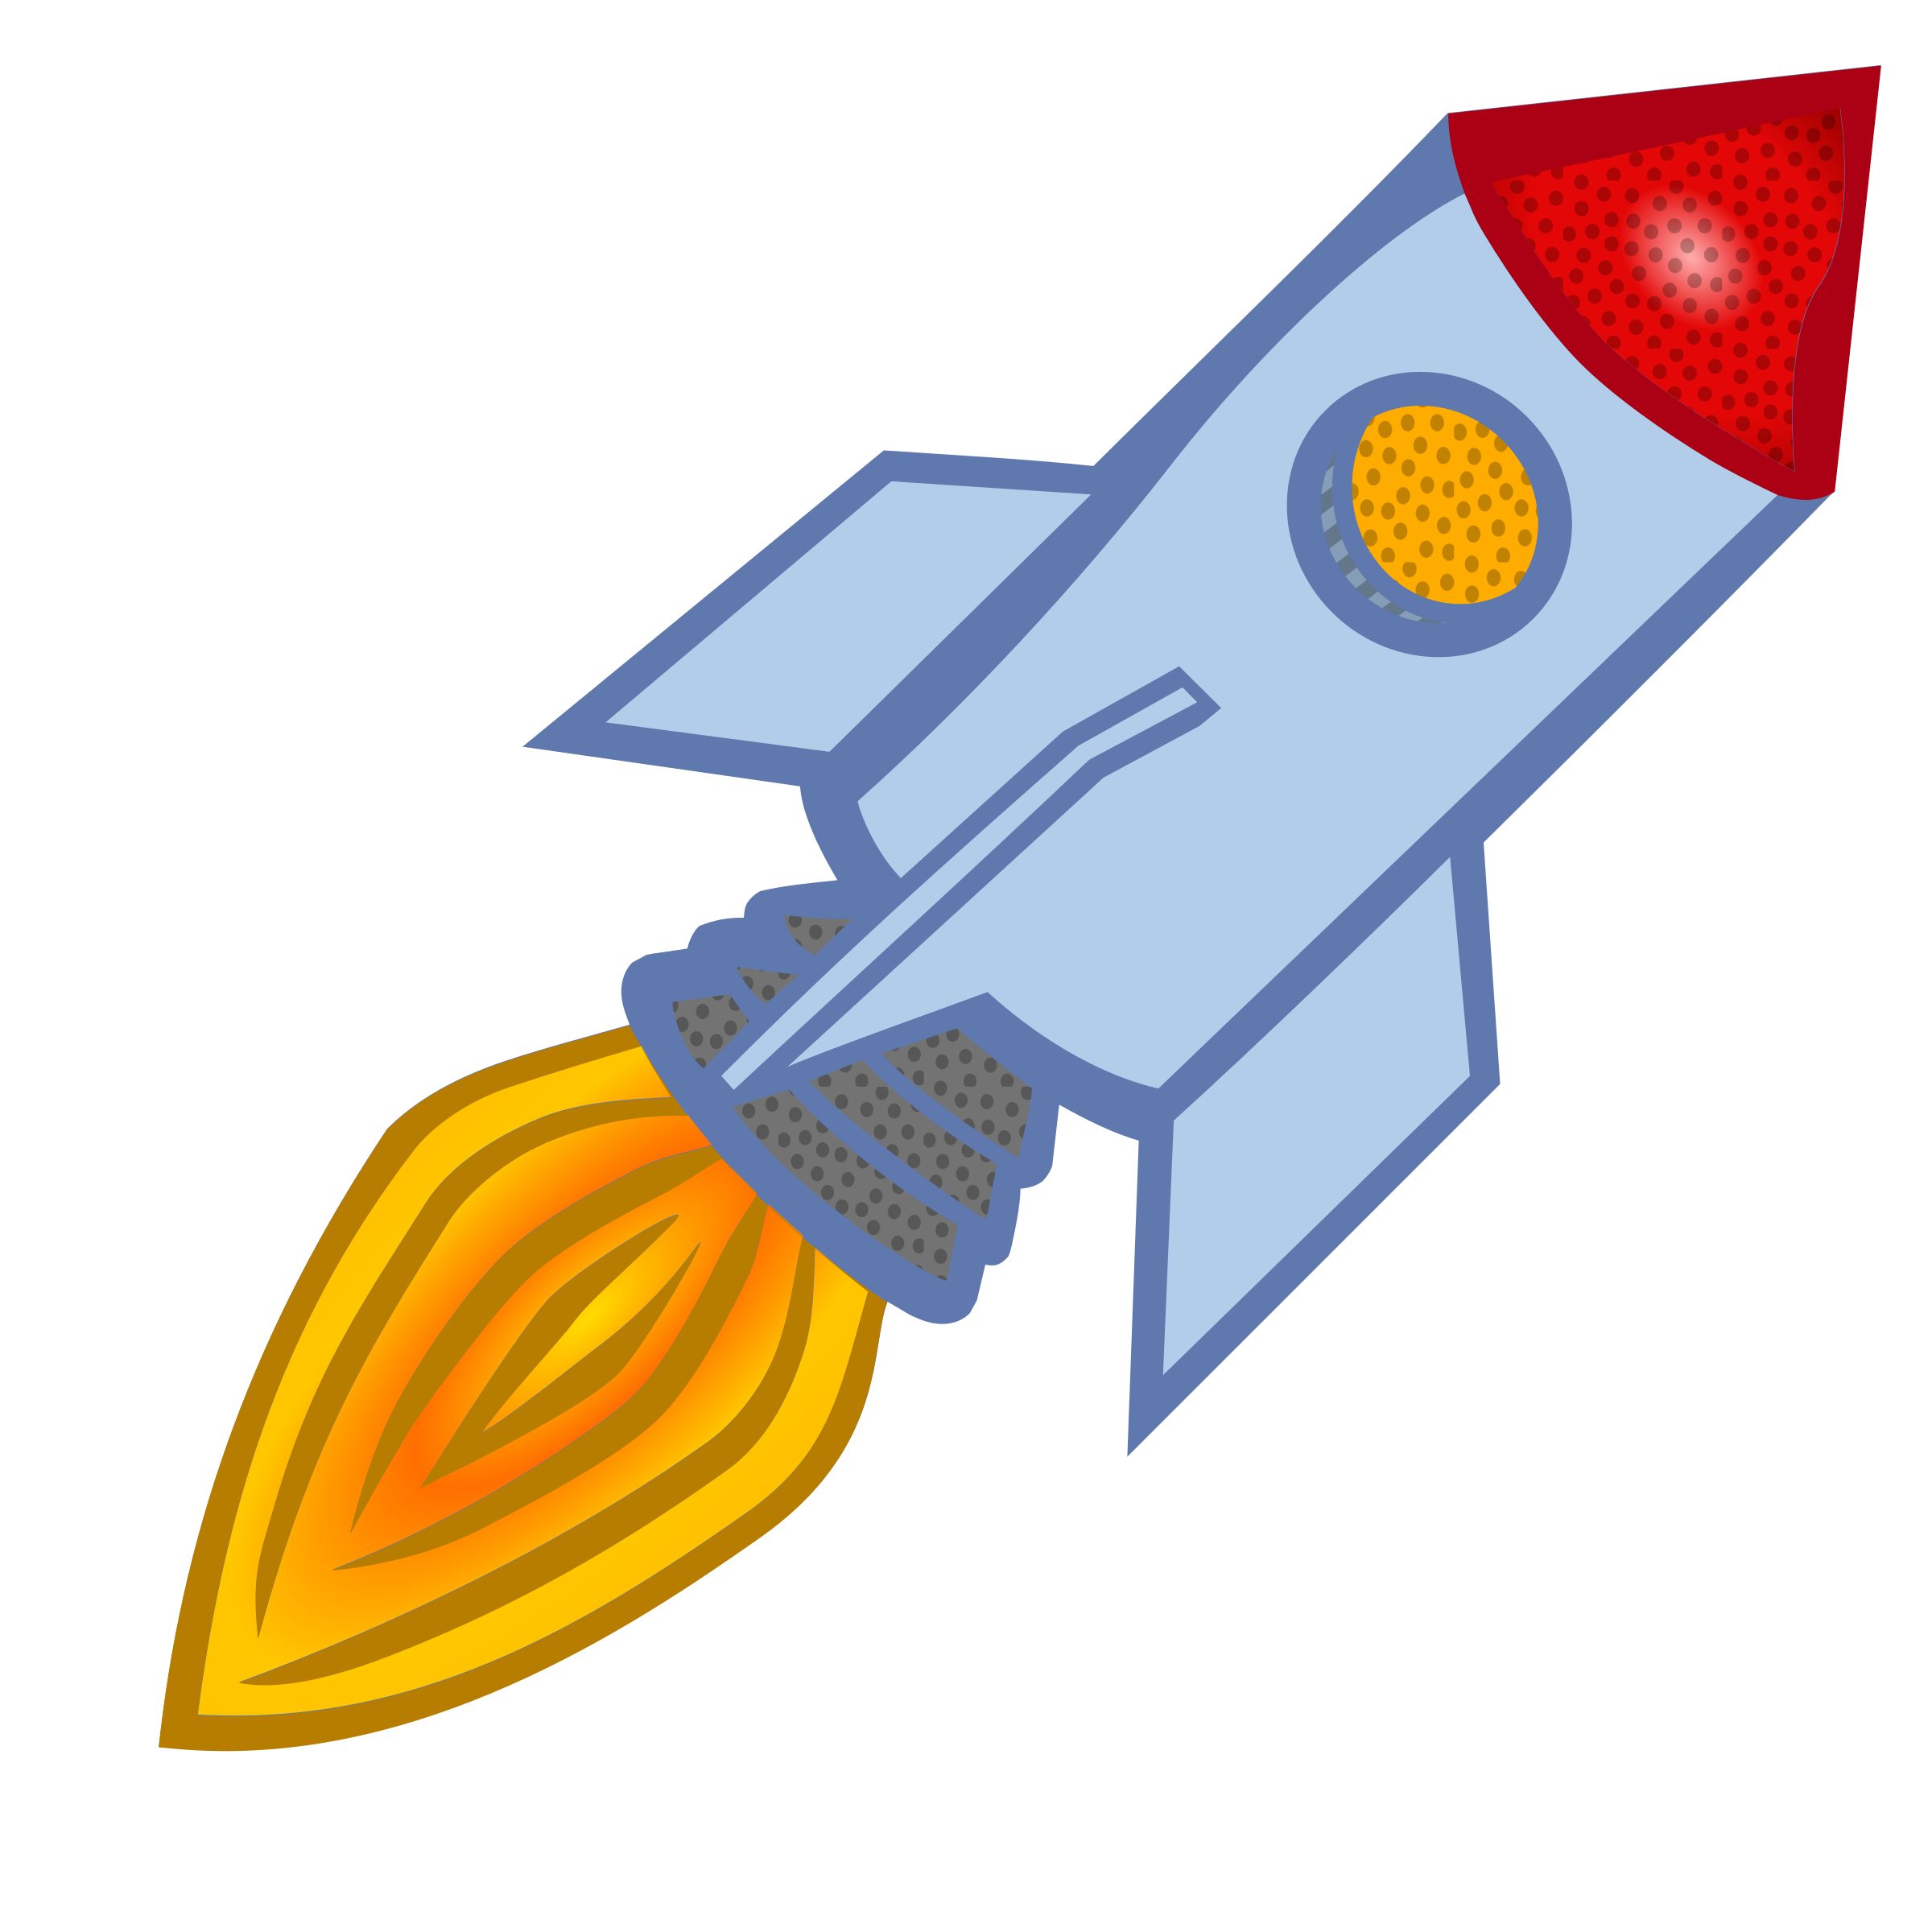 Rocket coloured rockets pinterest. Spaceship clipart missile launch